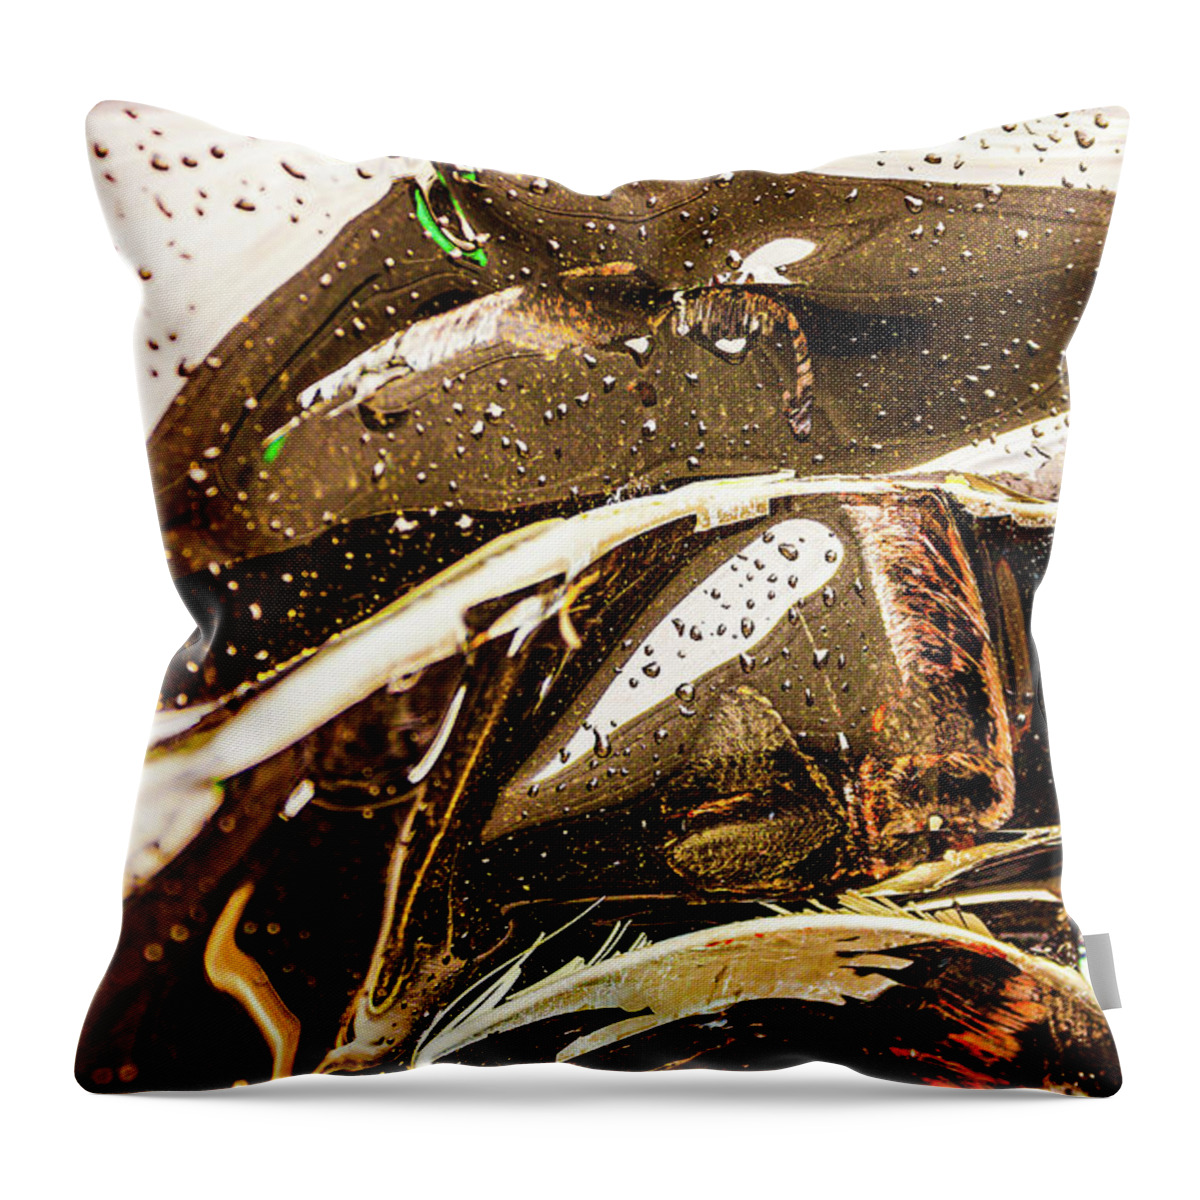 Raindrops Throw Pillow featuring the photograph Knautschzone No.4 by Liquid Eye